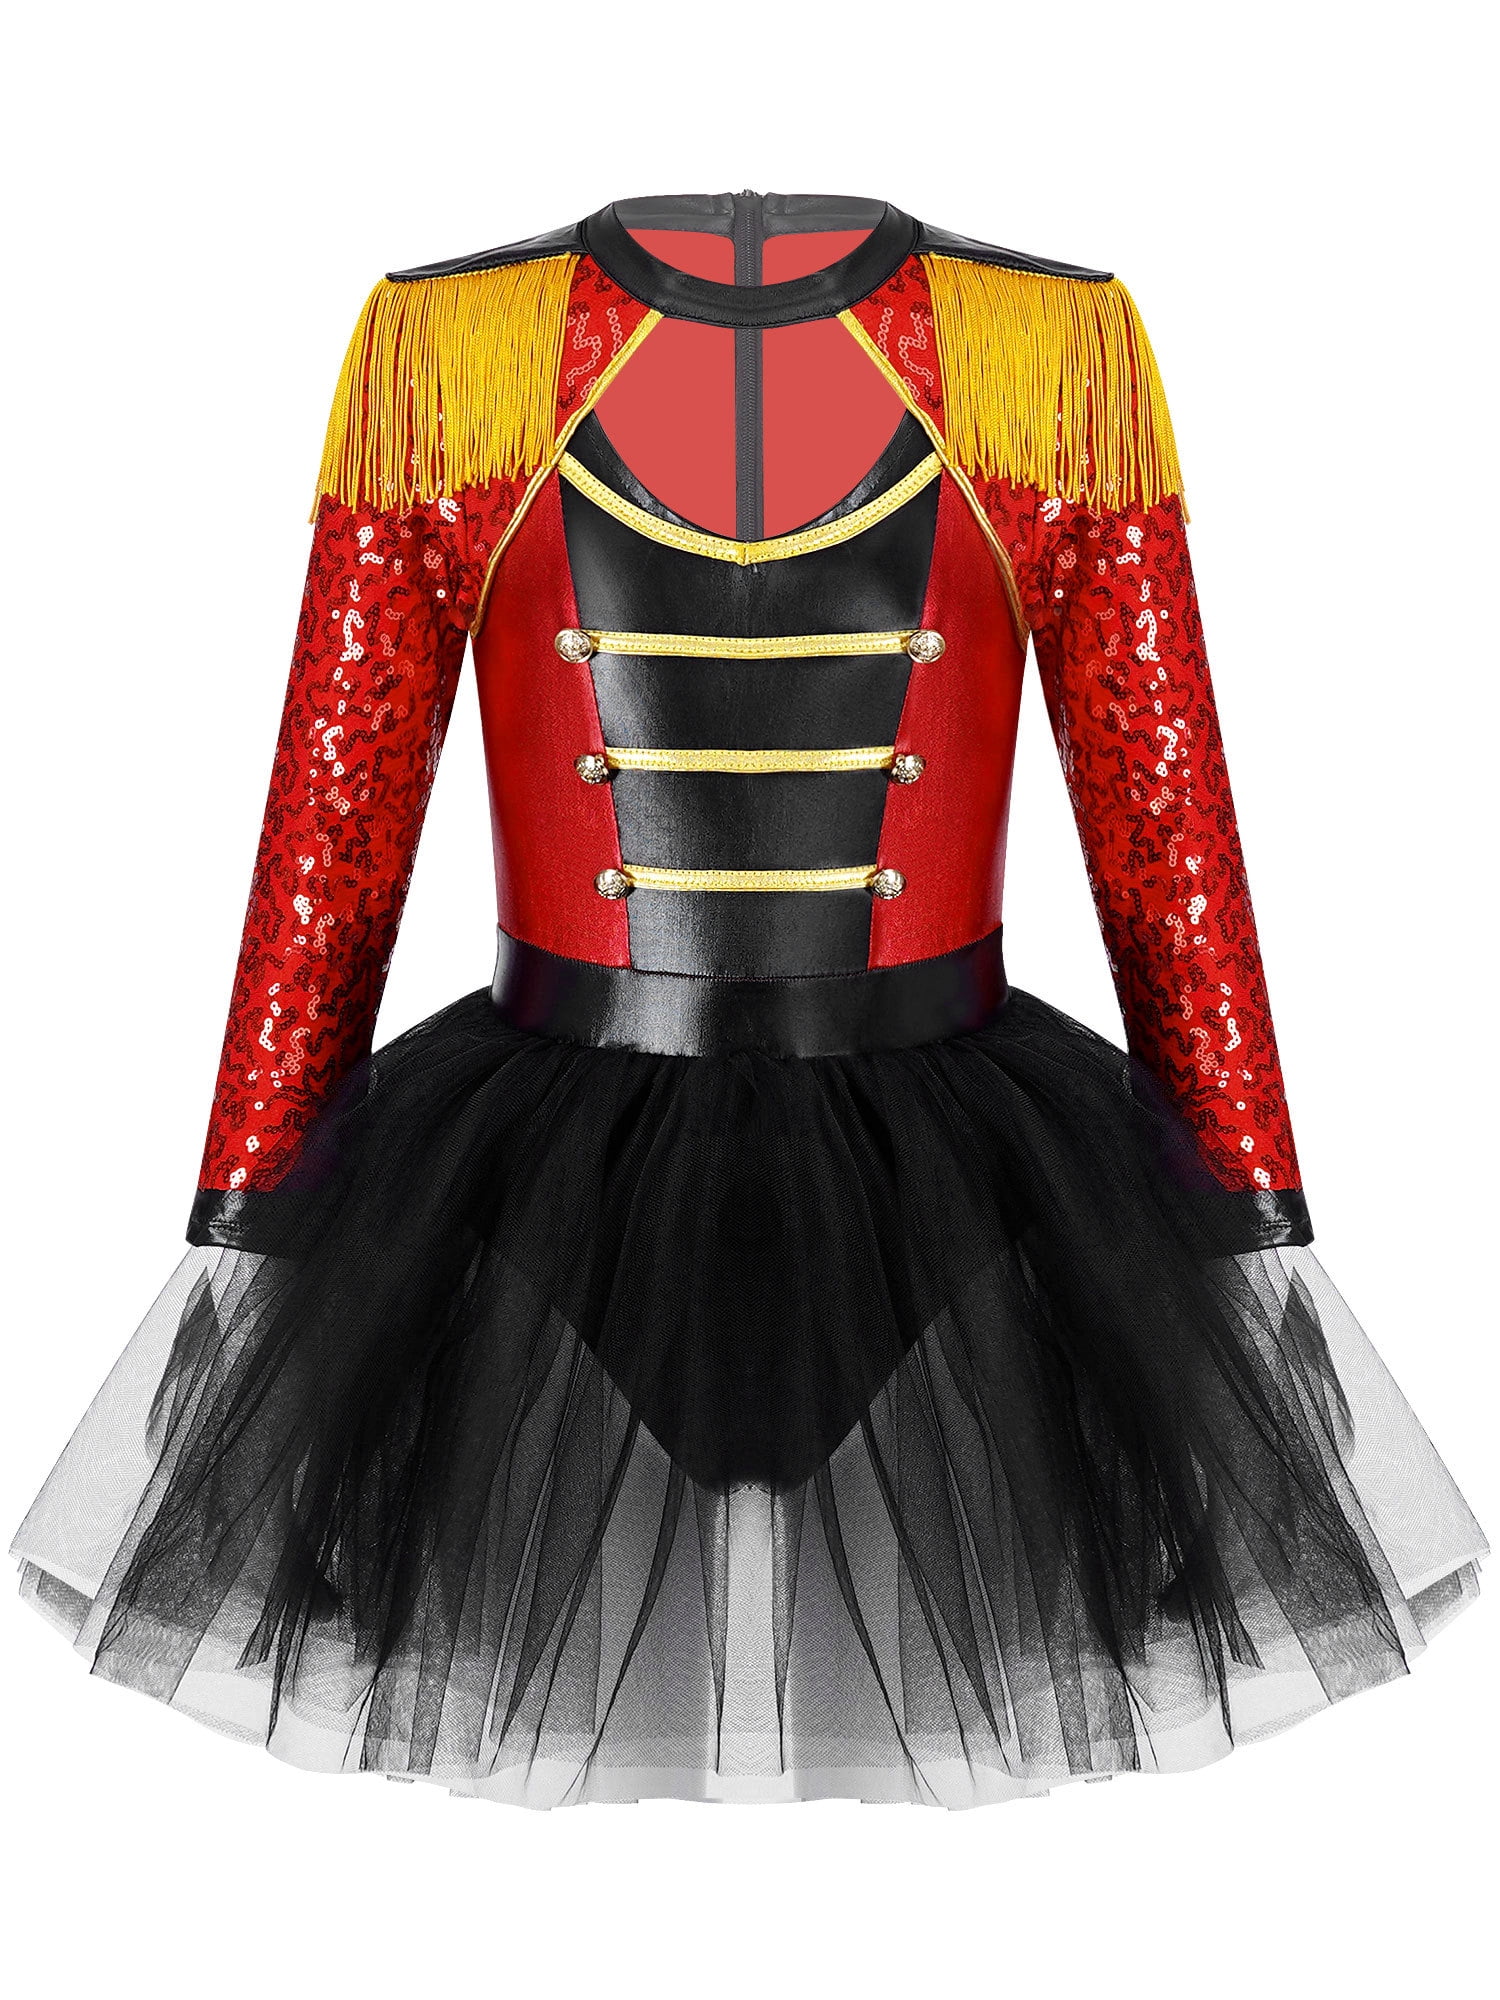  inhzoy Girls Circus Ringmaster Costume Chrismas Dress